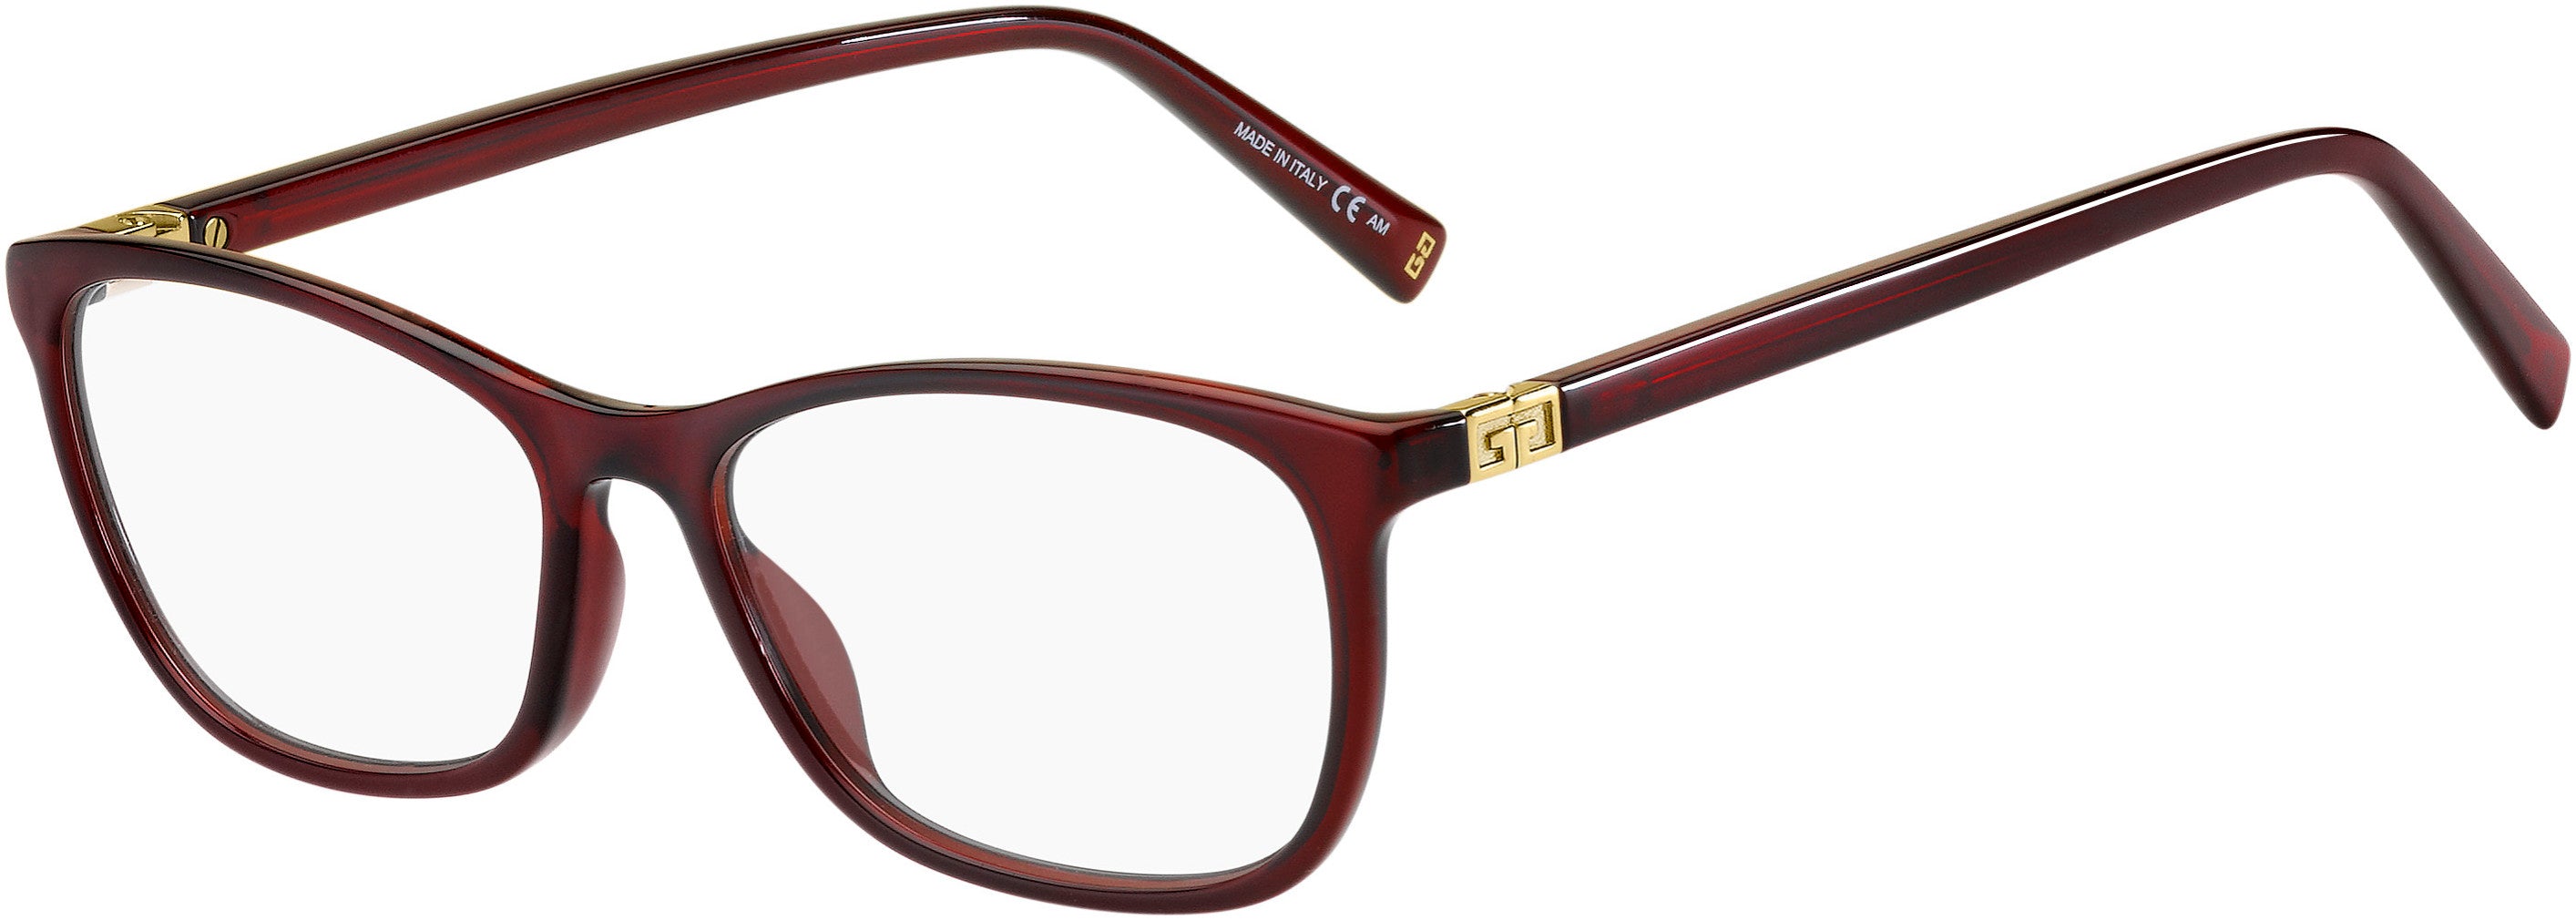  Givenchy 0143 Rectangular Eyeglasses 0LHF-0LHF  Opal Burgundy (00 Demo Lens)